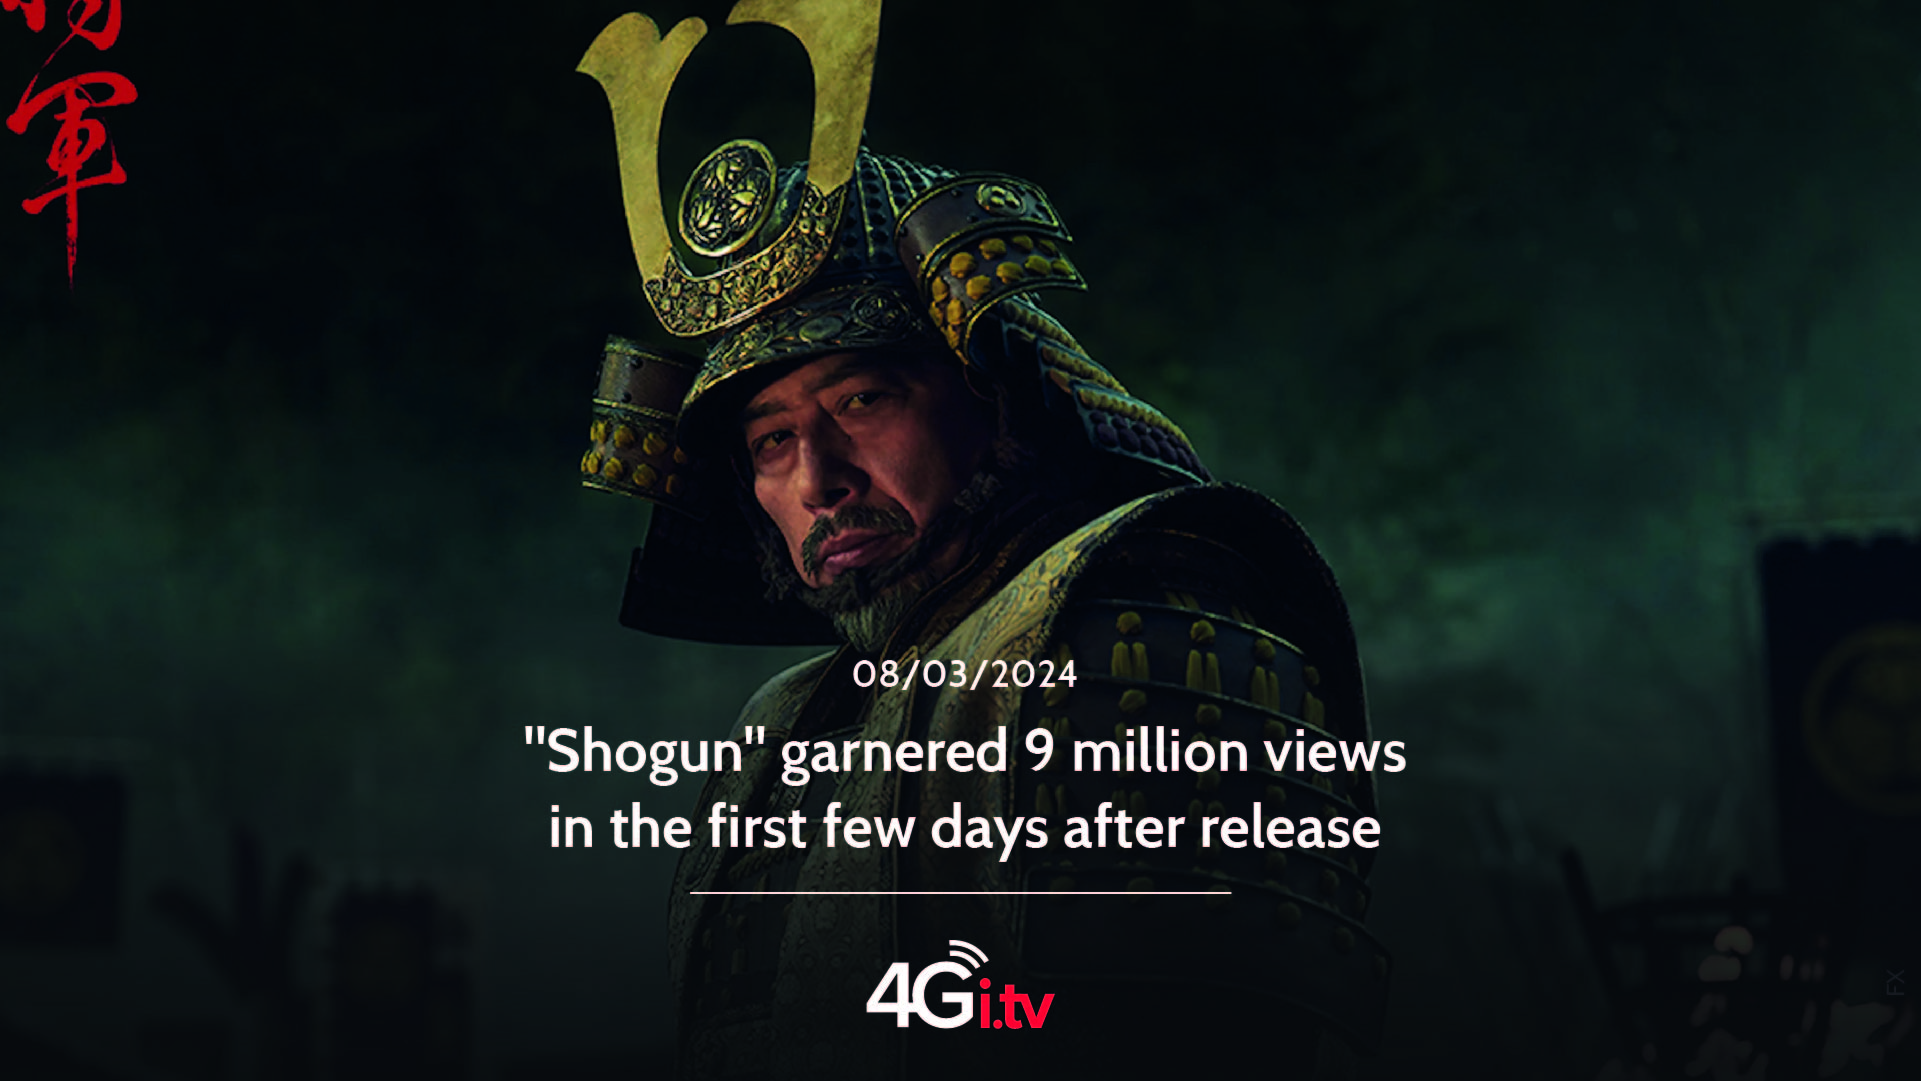 Подробнее о статье “Shogun” garnered 9 million views in the first few days after release